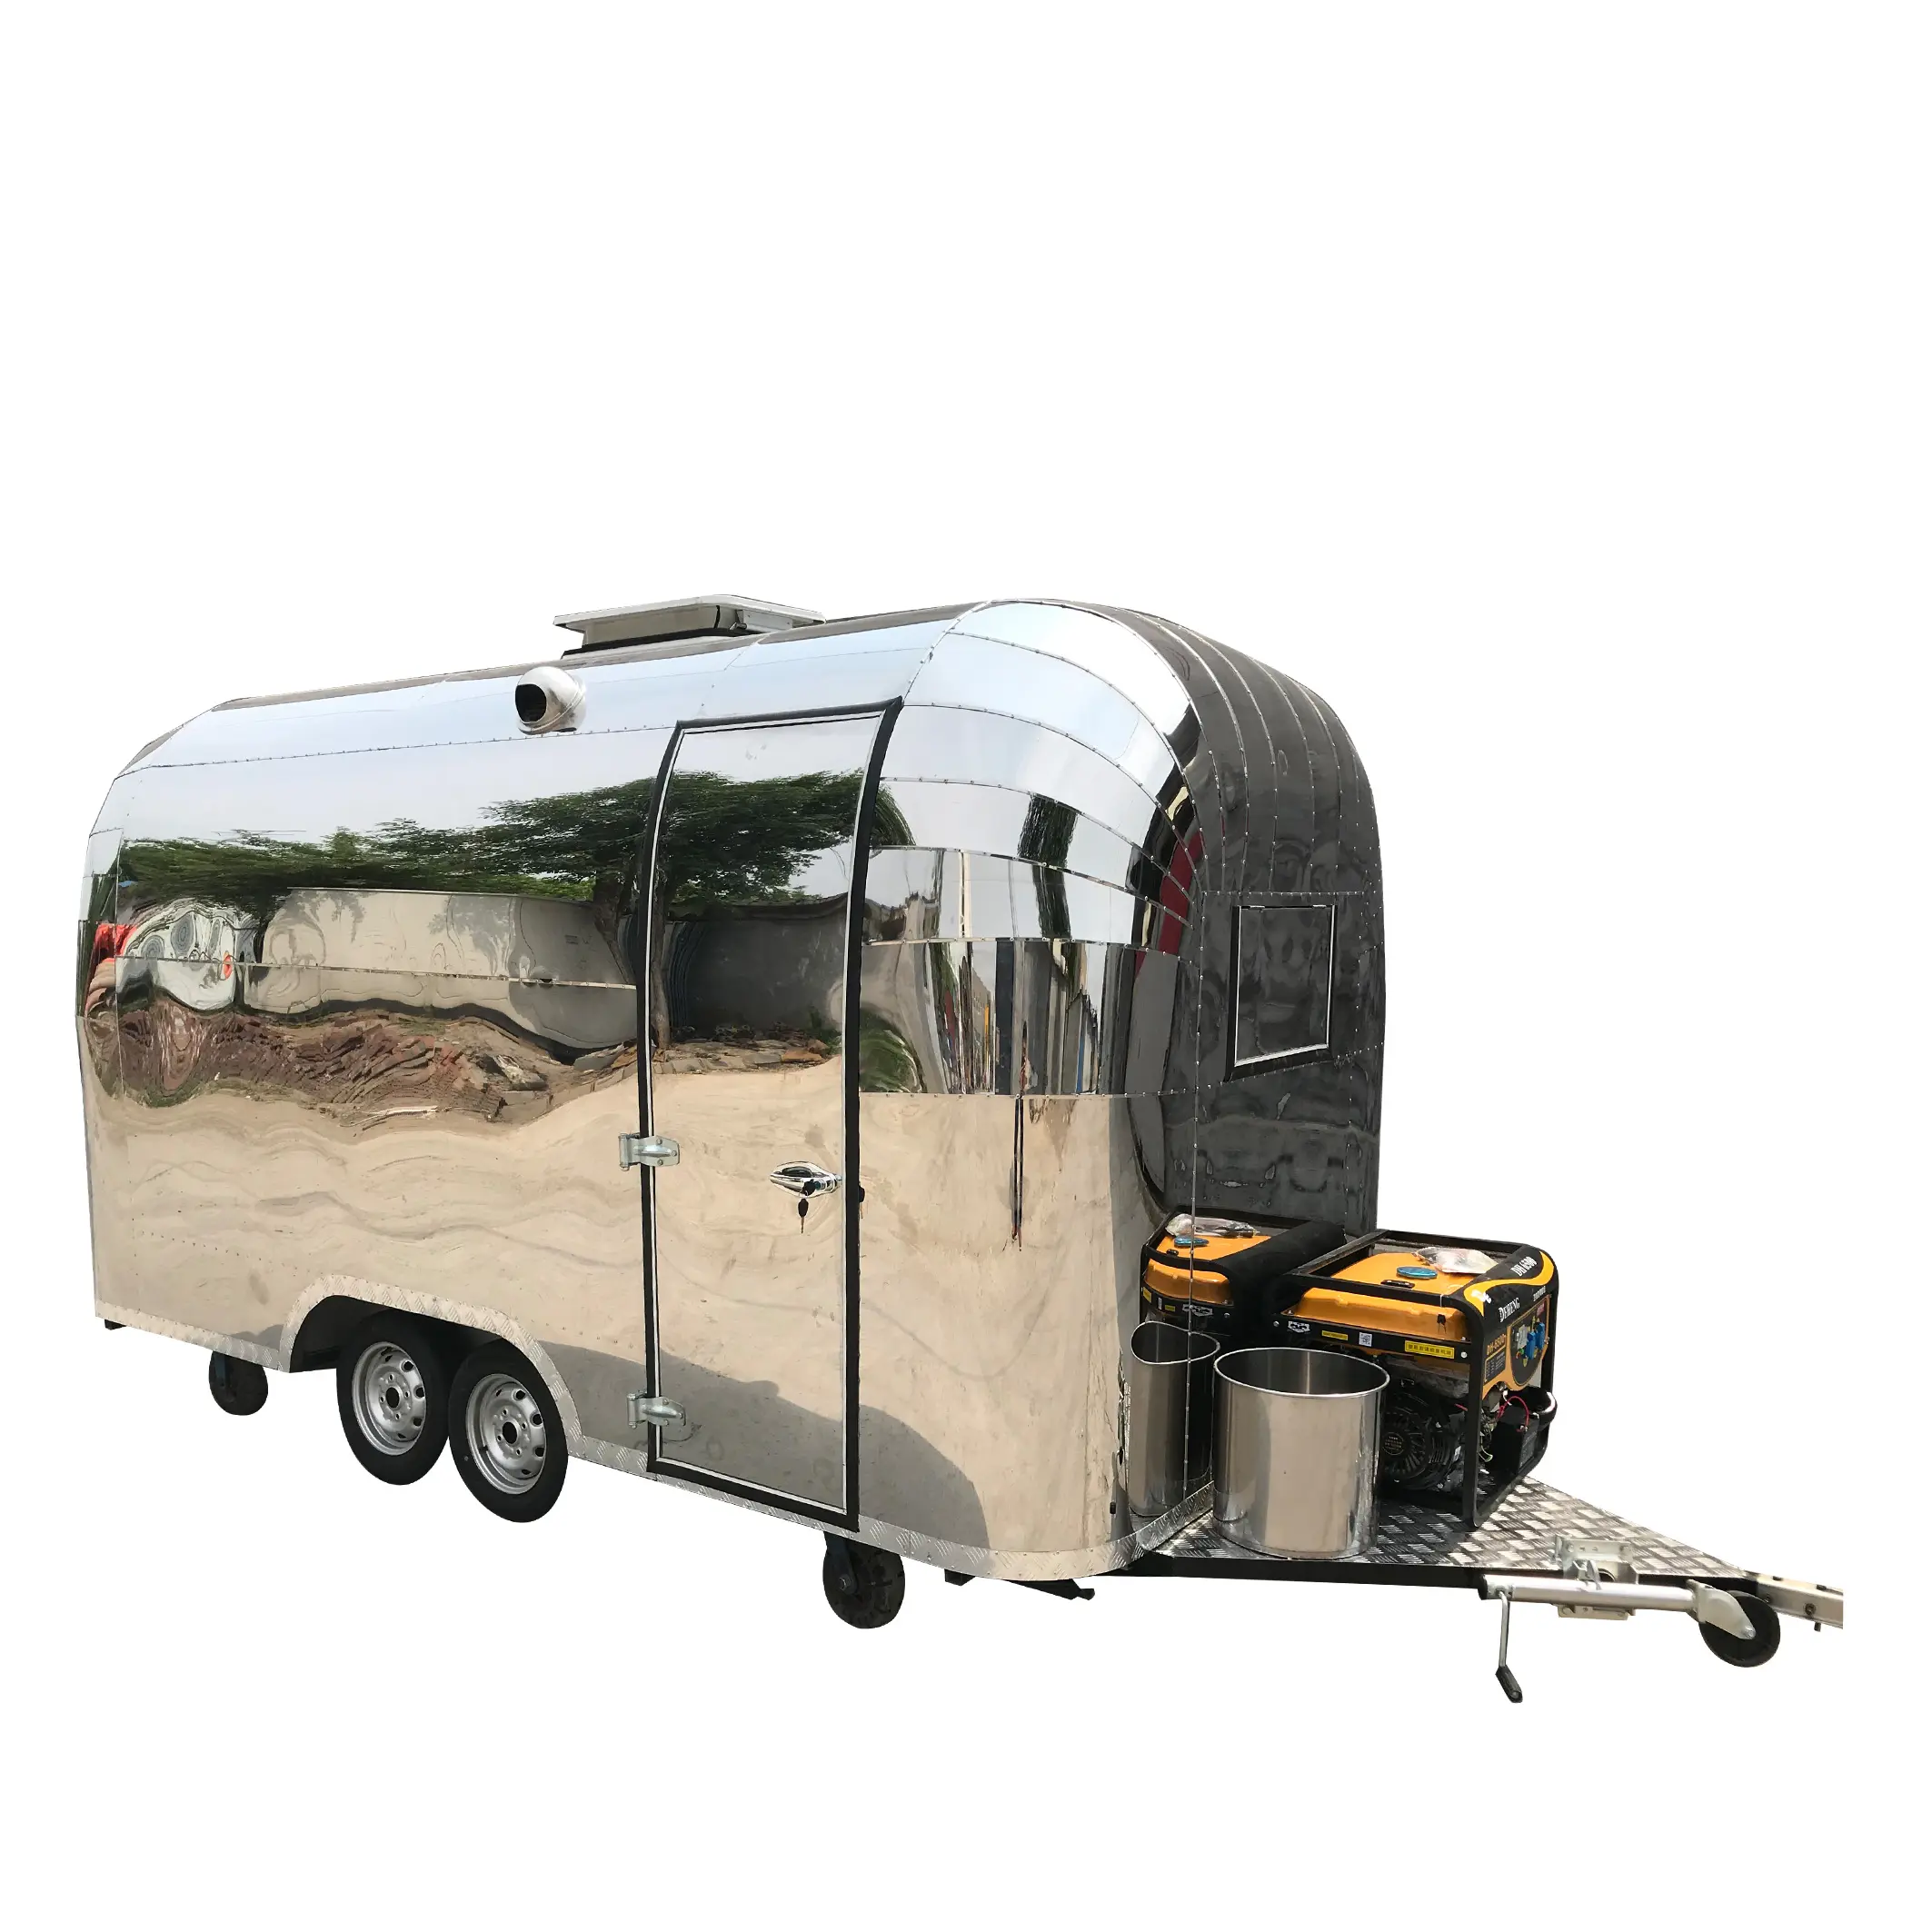 TUNE-remorque mobile Airstream Mirror en acier inoxydable pour camion de restauration, café, jus et smoothie